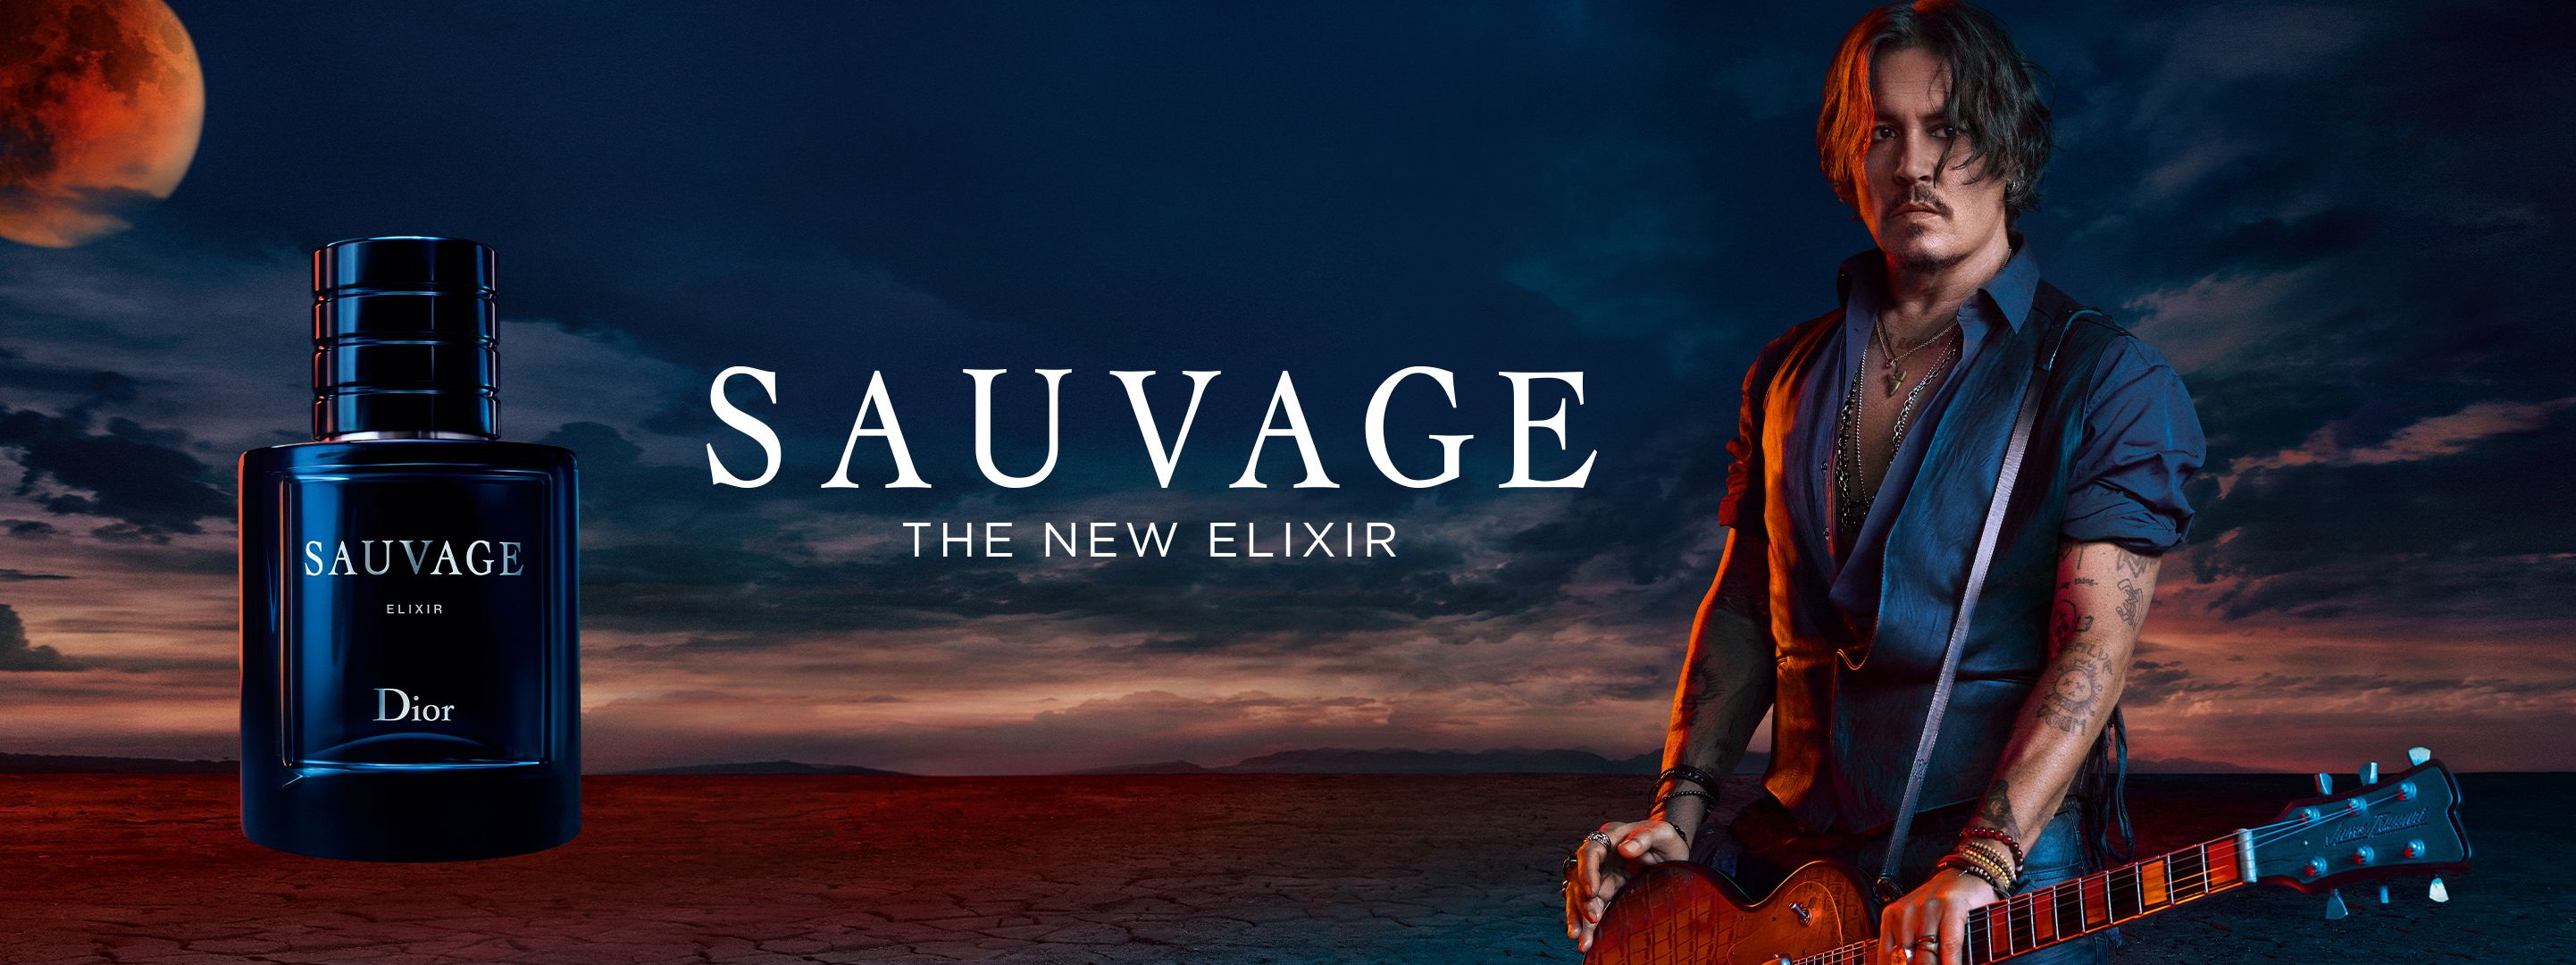 Sauvage élixir édition 2021 de Dior Johnny Depp